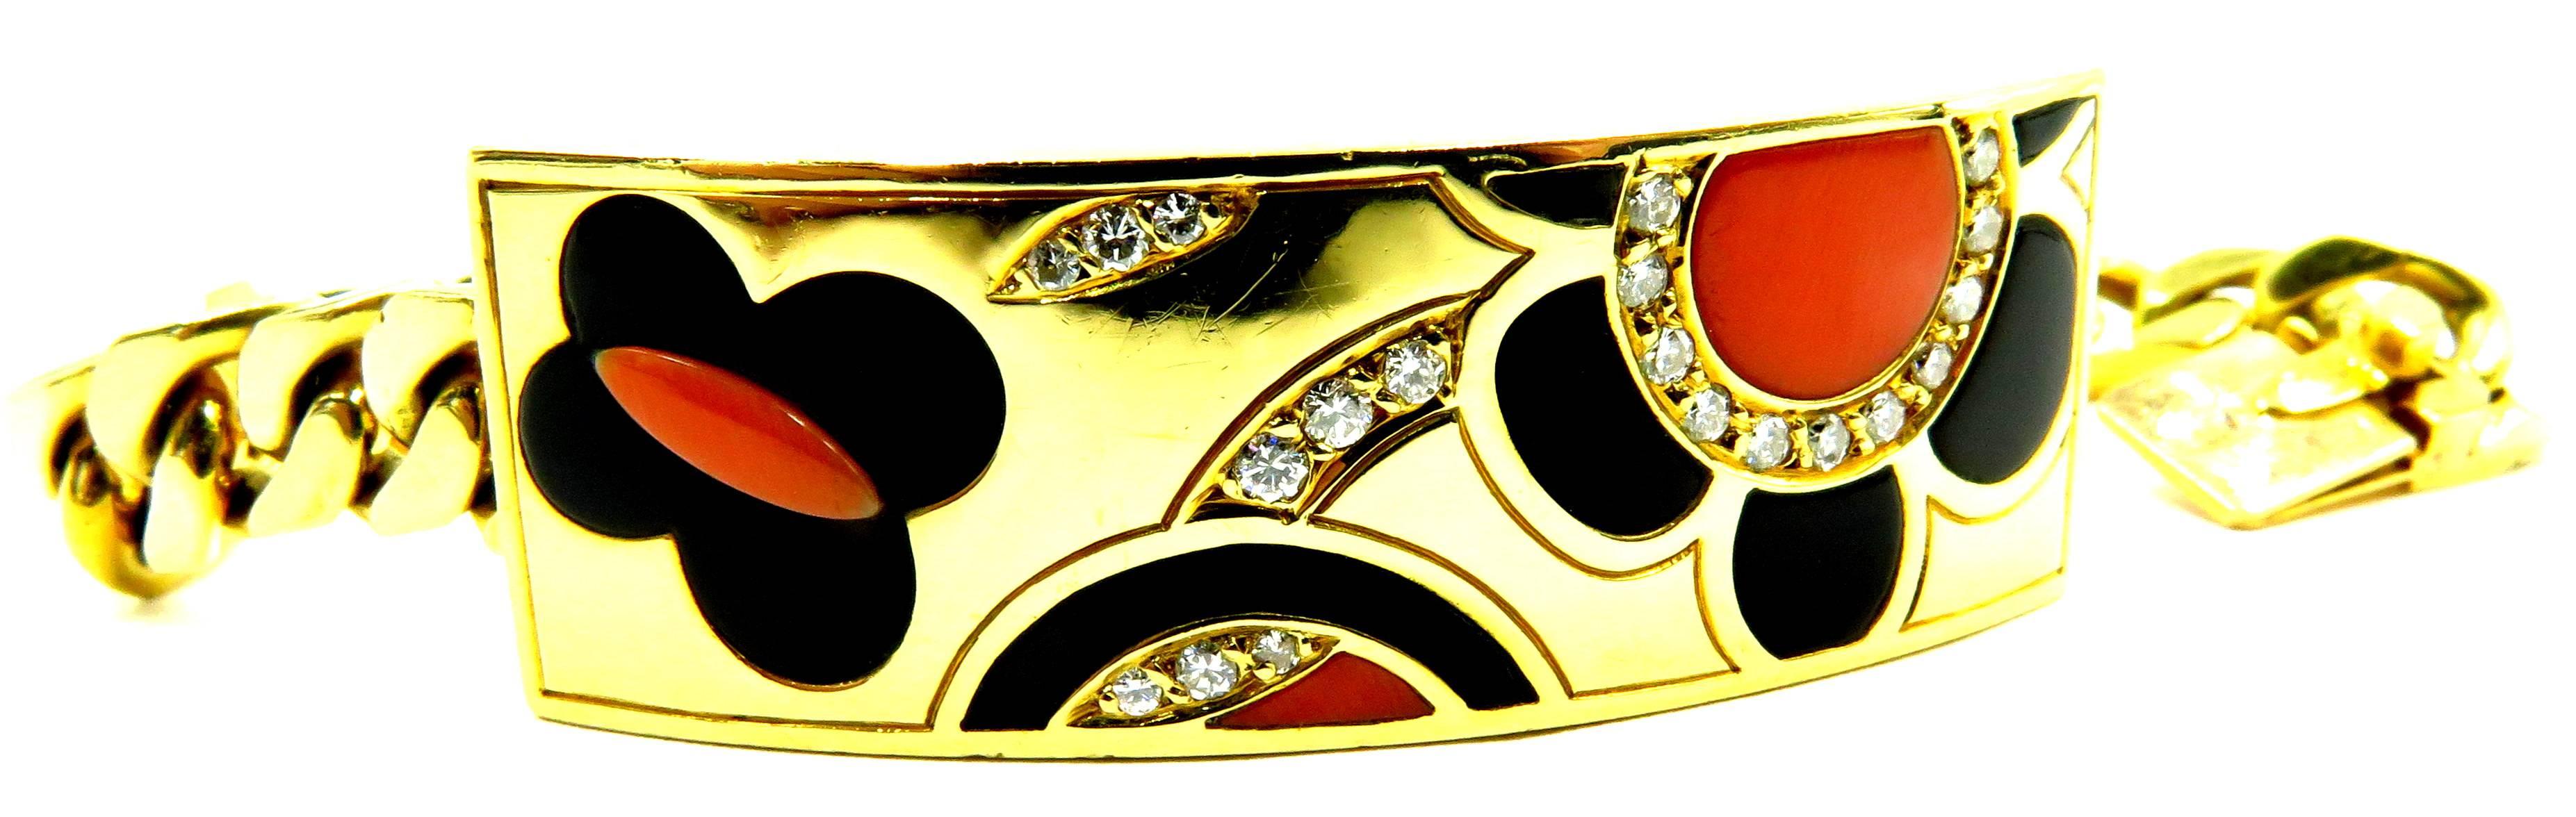 Timeless Bvlgari Coral Onyx Diamond Heavy Link ID Style Inlaid Gold Bracelet 1